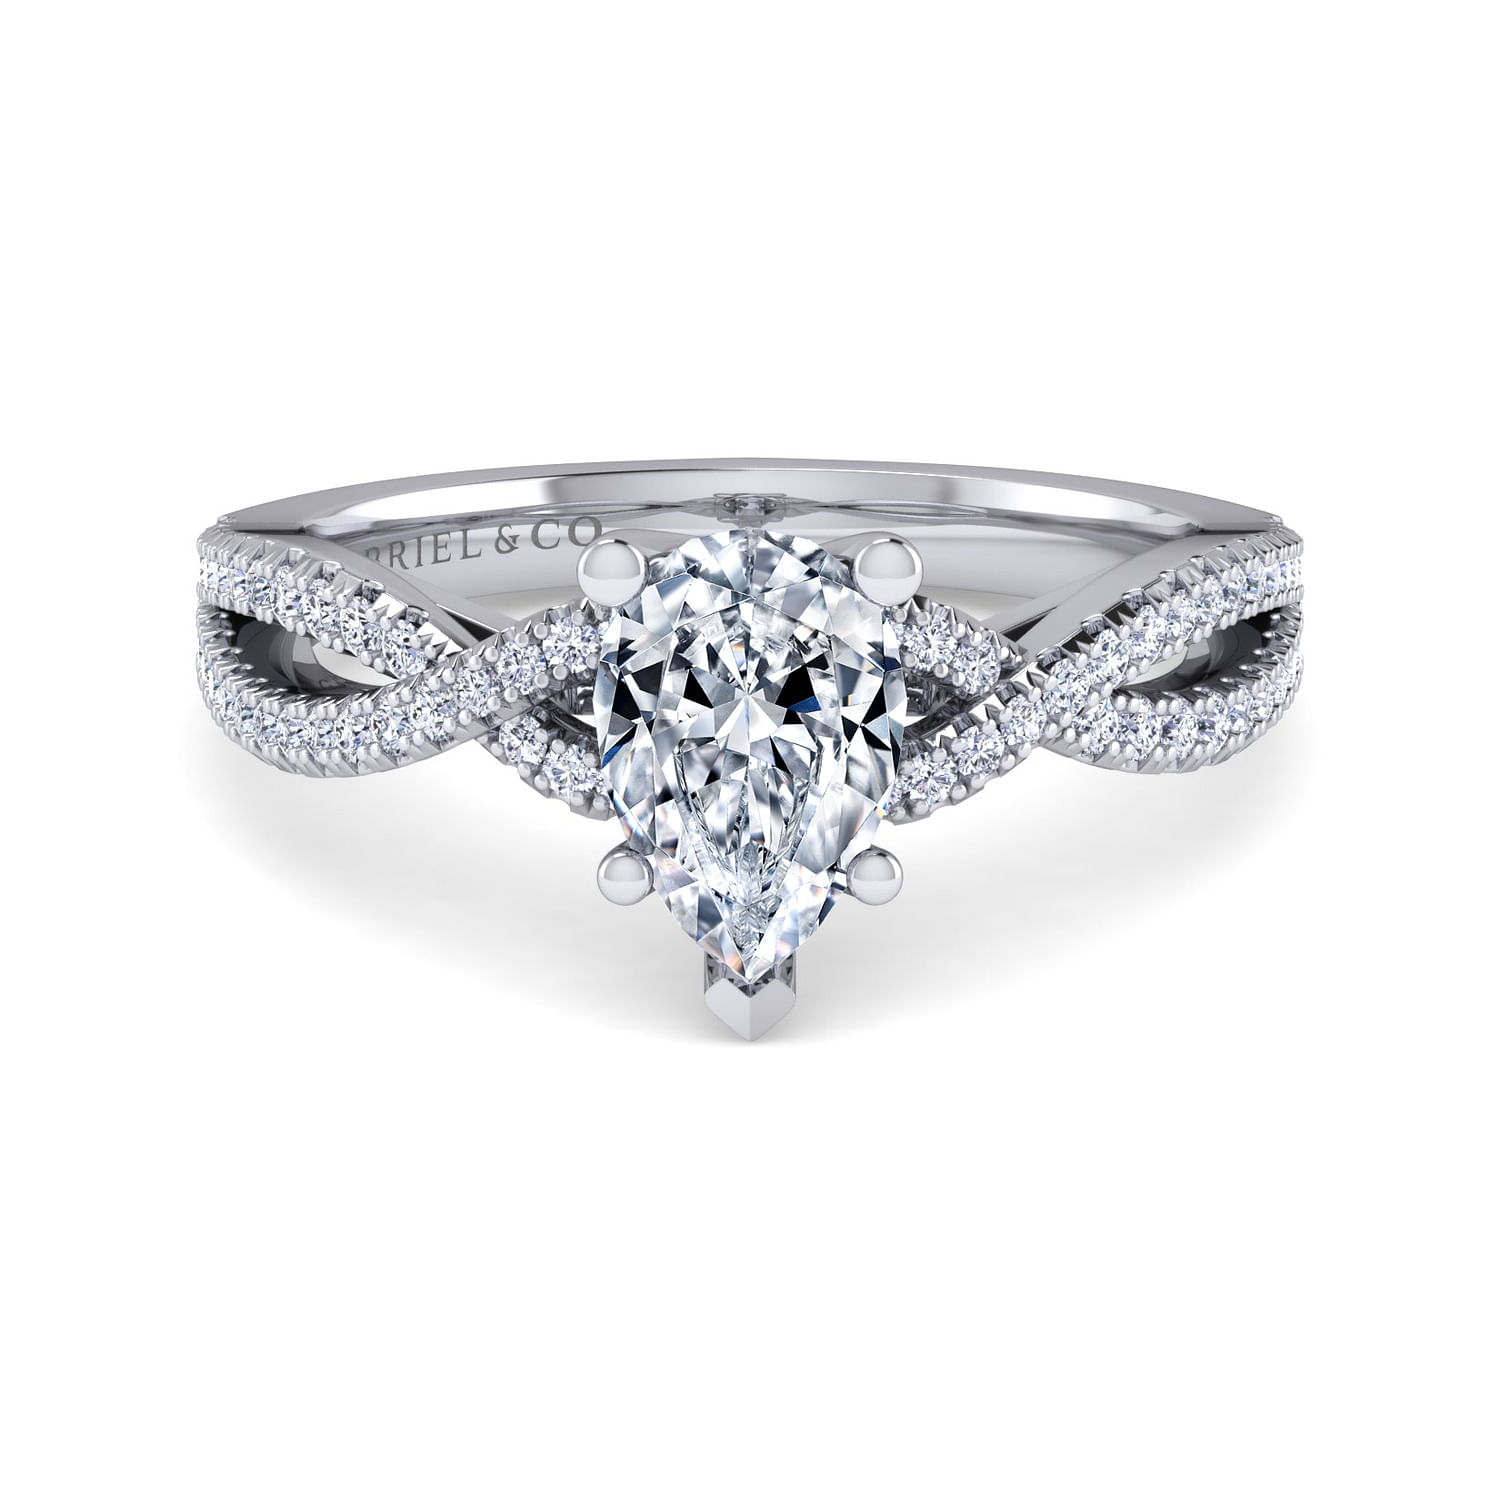 Gina---14K-White-Gold-Twisted-Pear-Shape-Diamond-Engagement-Ring1